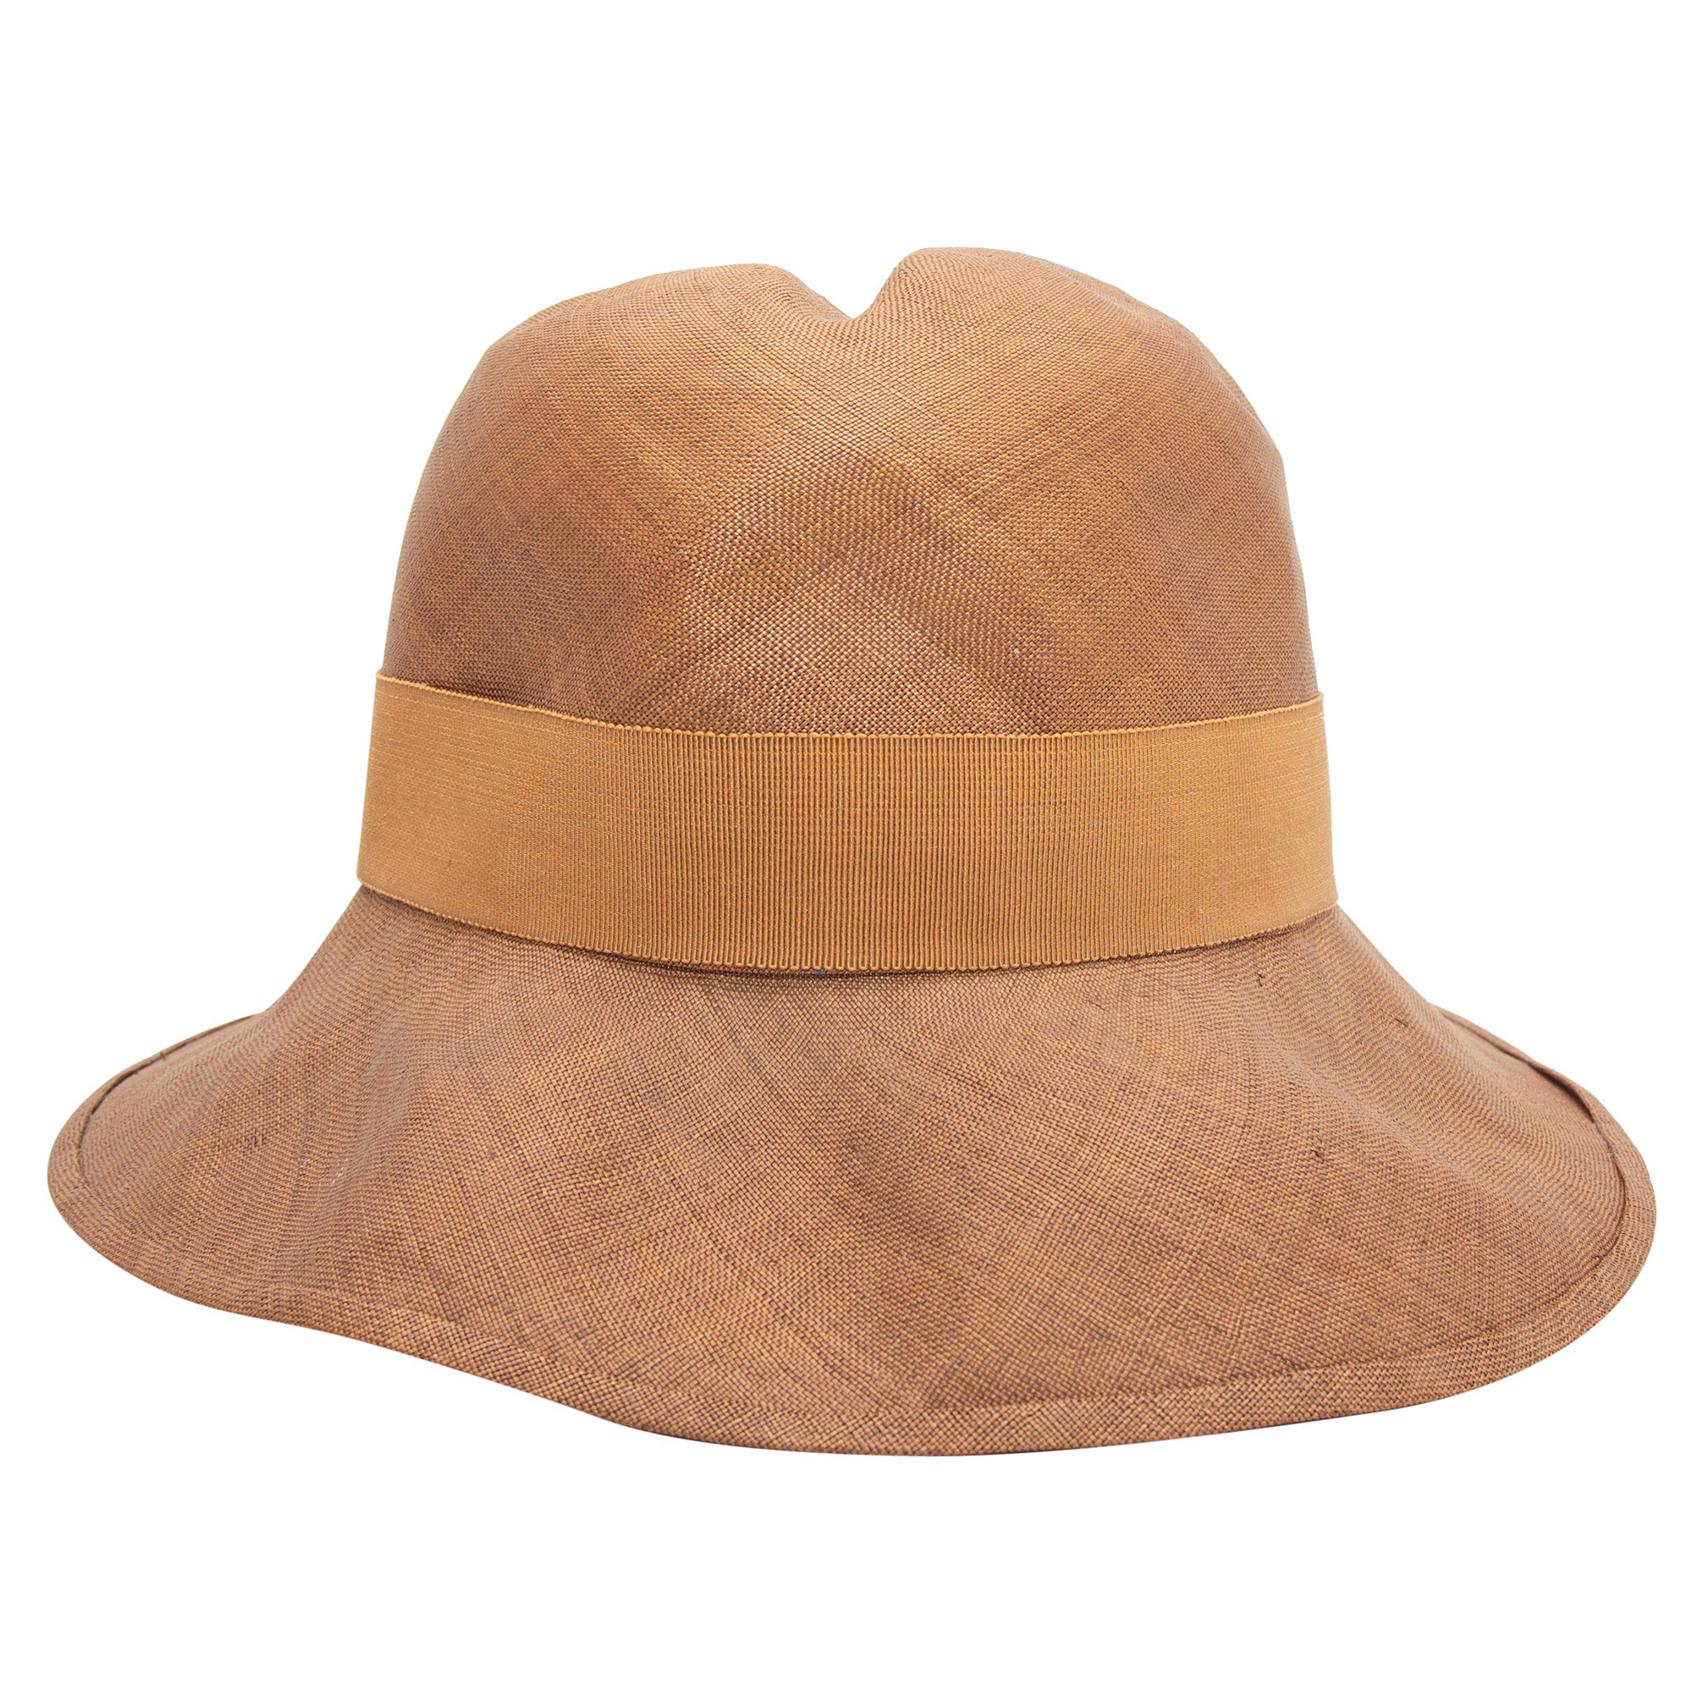 Chanel Tan Straw Wide Brim Hat